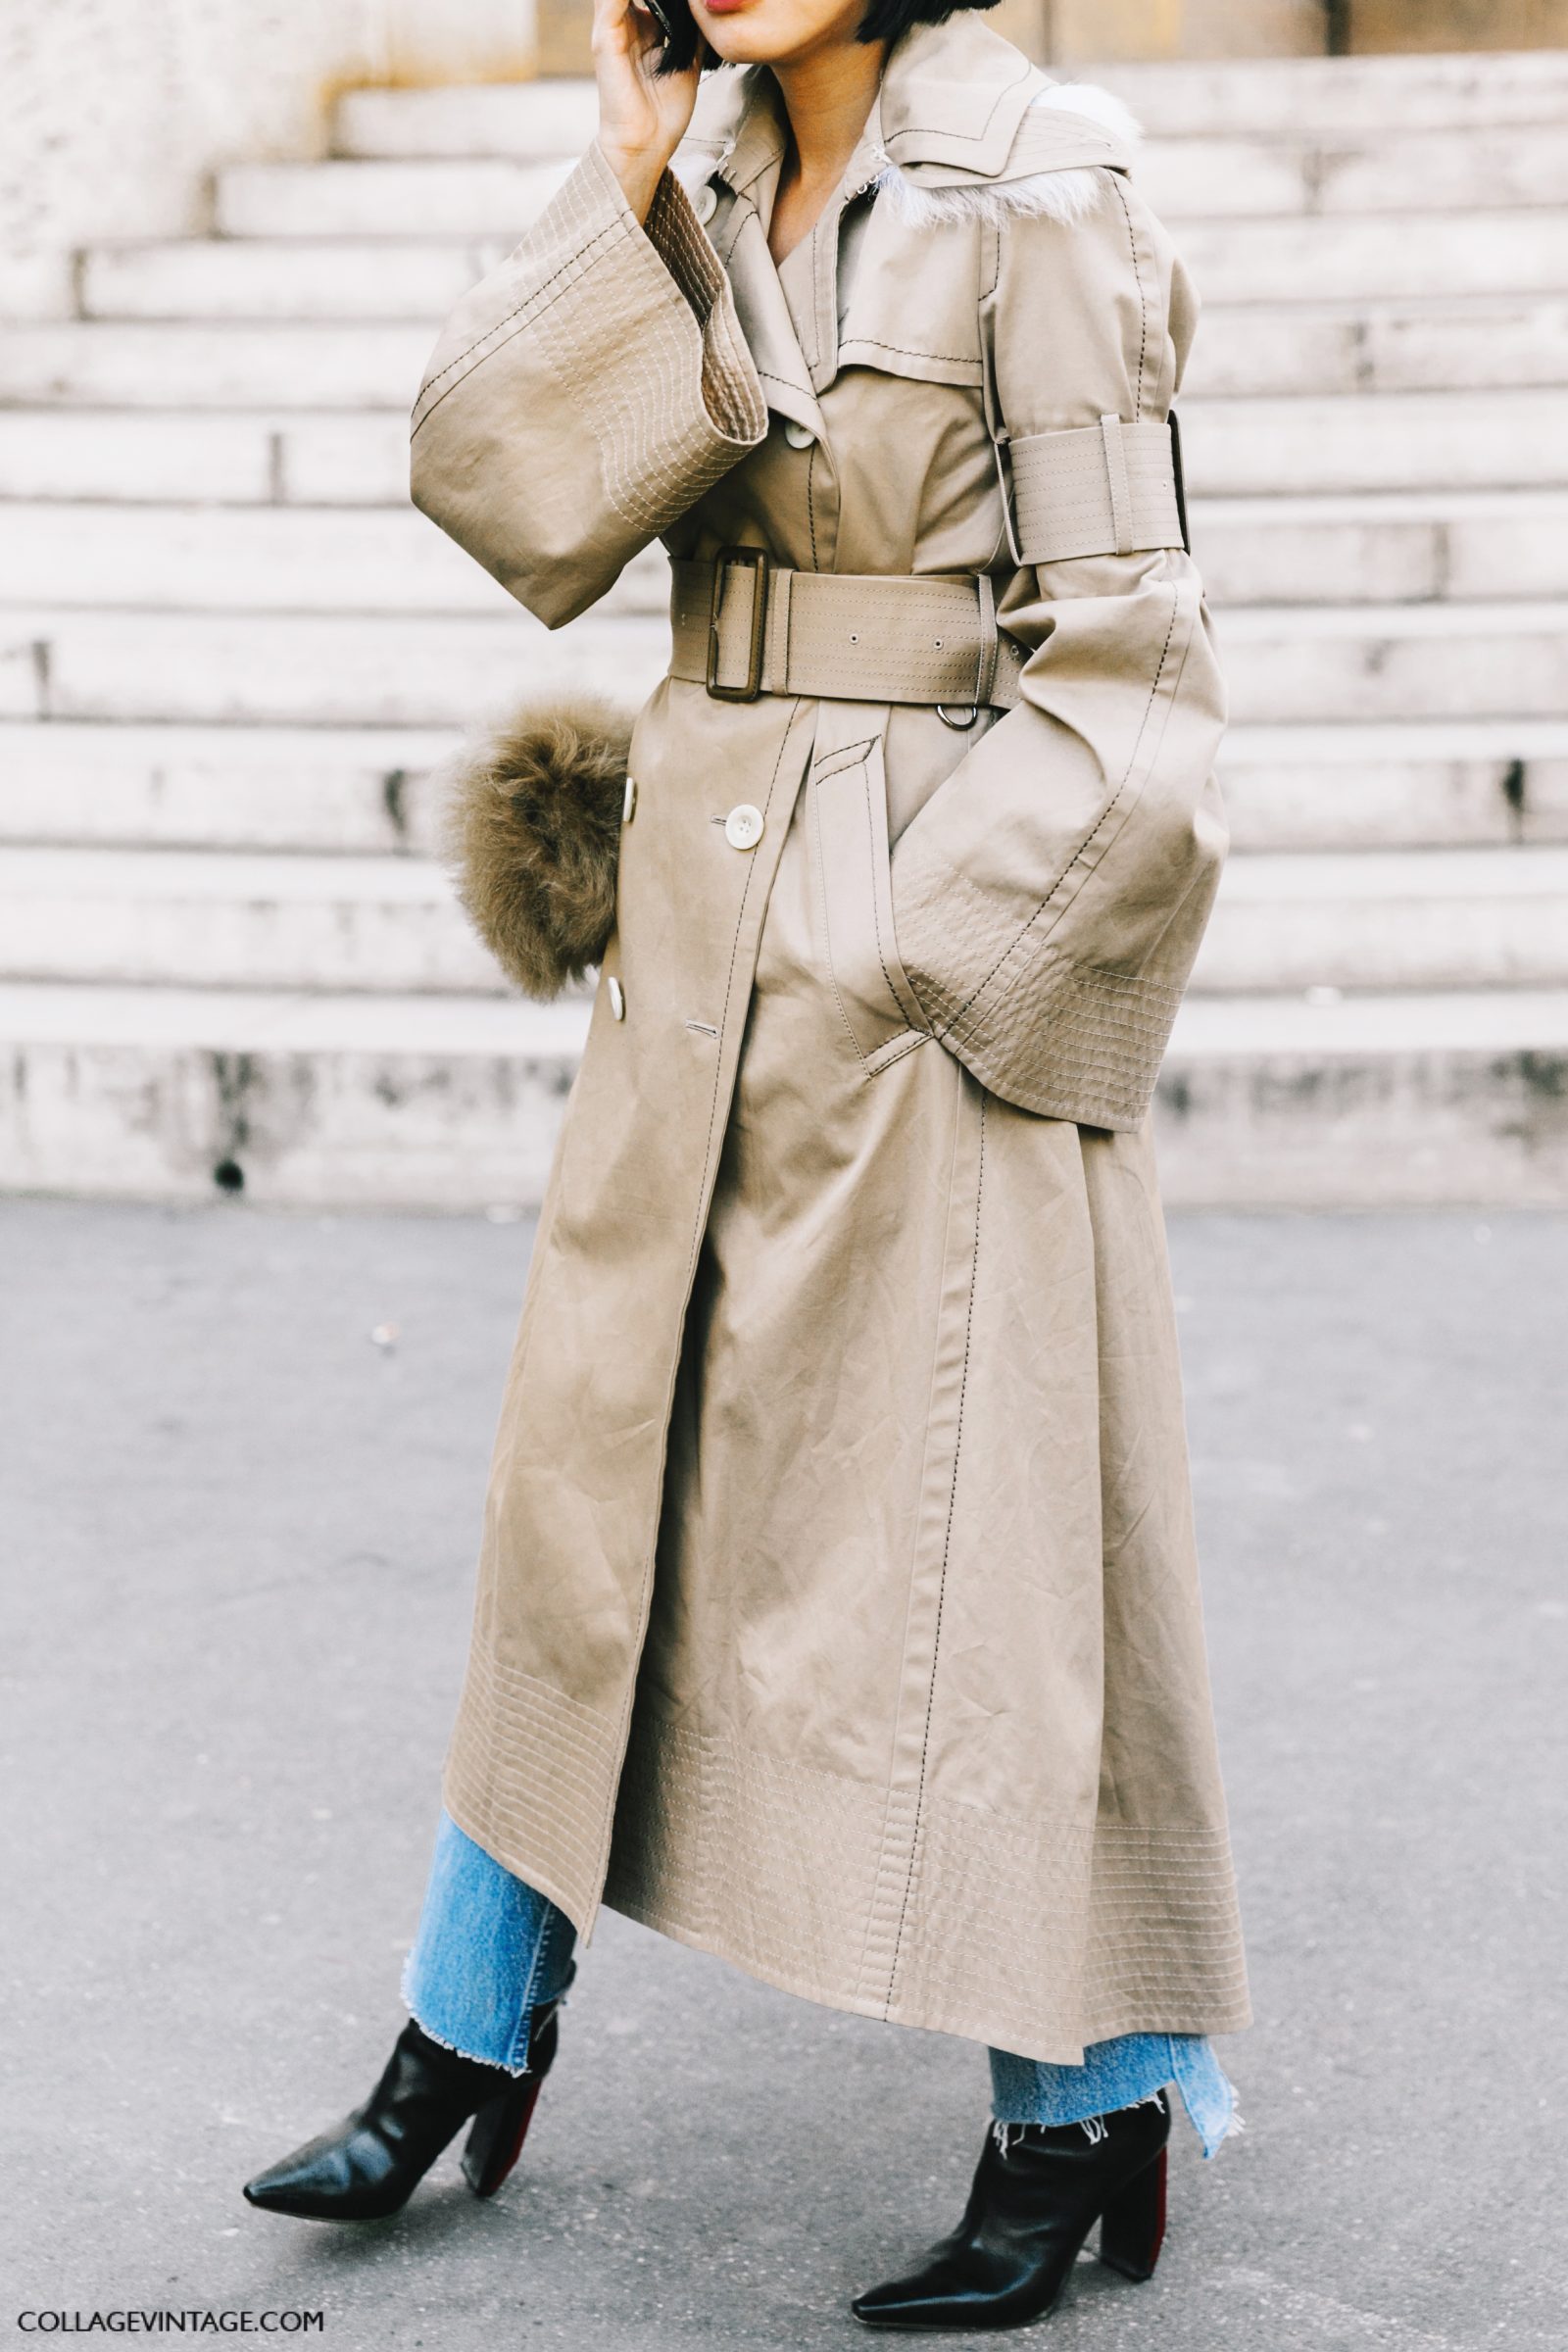 pfw-paris_fashion_week_ss17-street_style-outfits-collage_vintage-olympia_letan-hermes-stella_mccartney-sacai-68